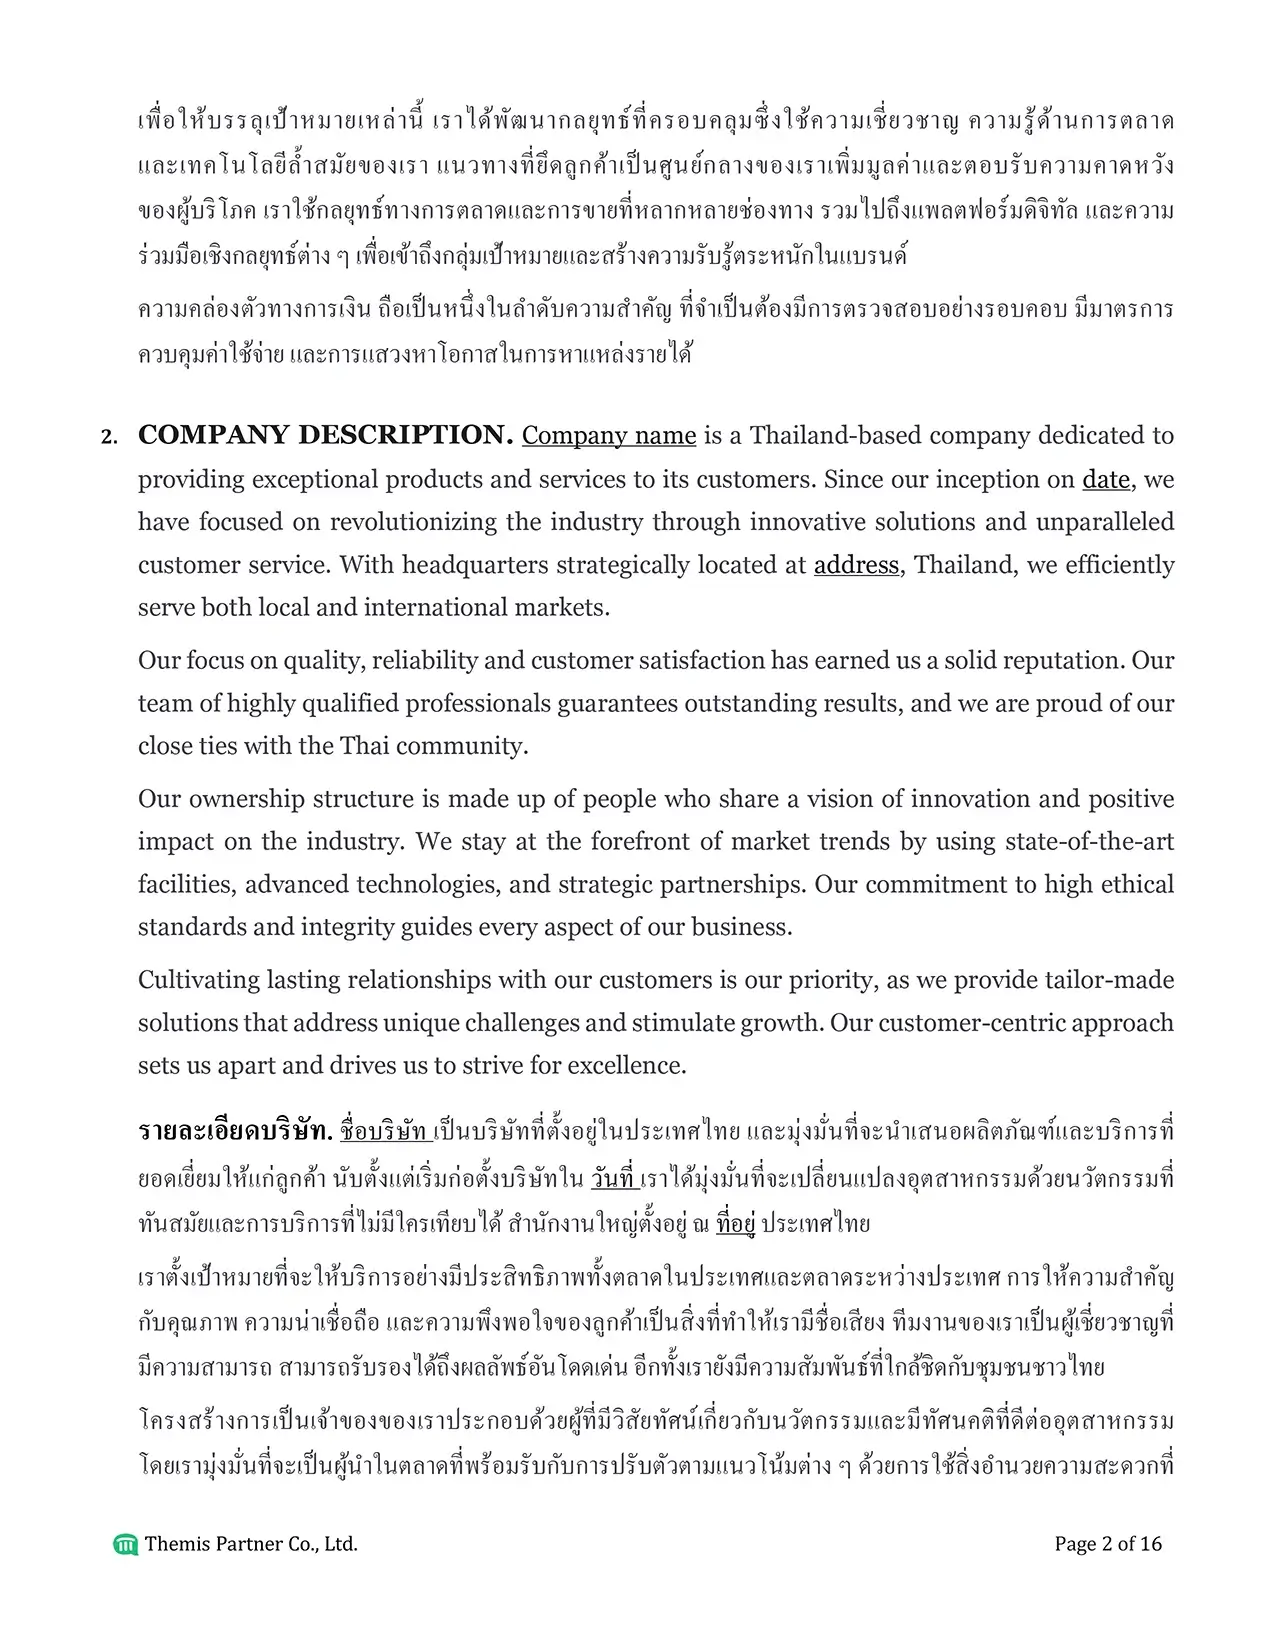 Business plan Thailand 2